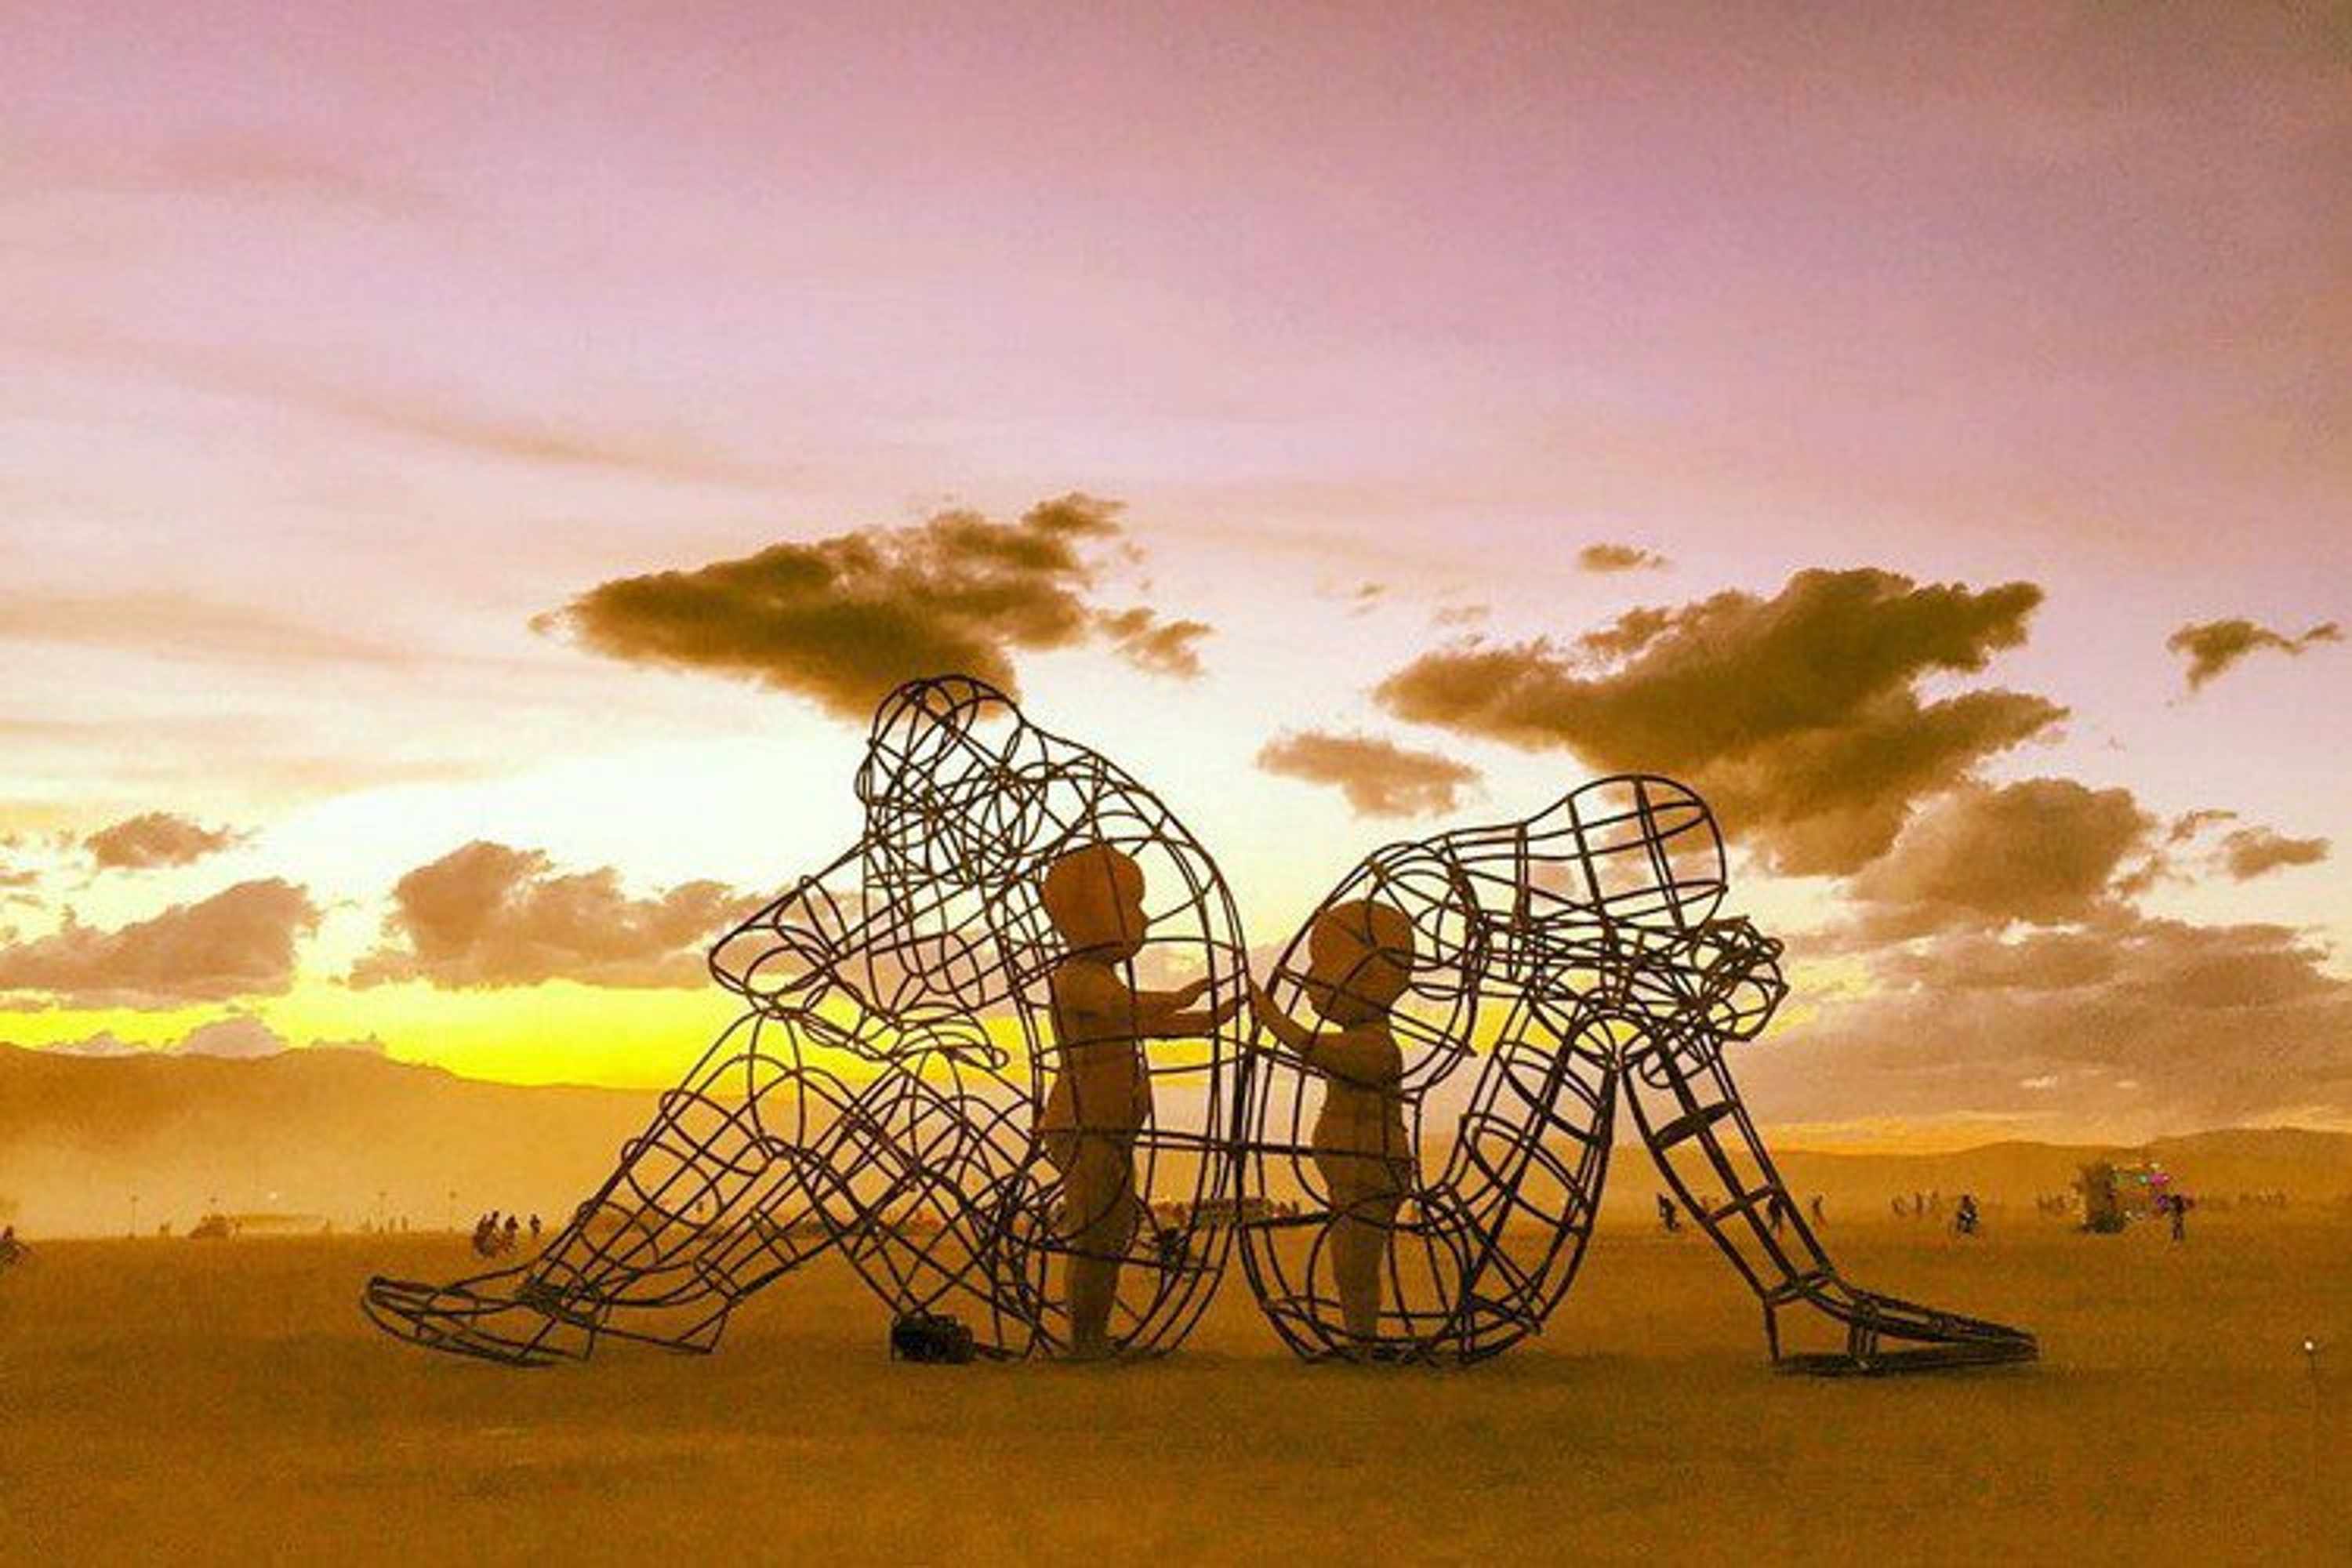 “Love.” Created by Alexandr Milov at Burning Man 2015